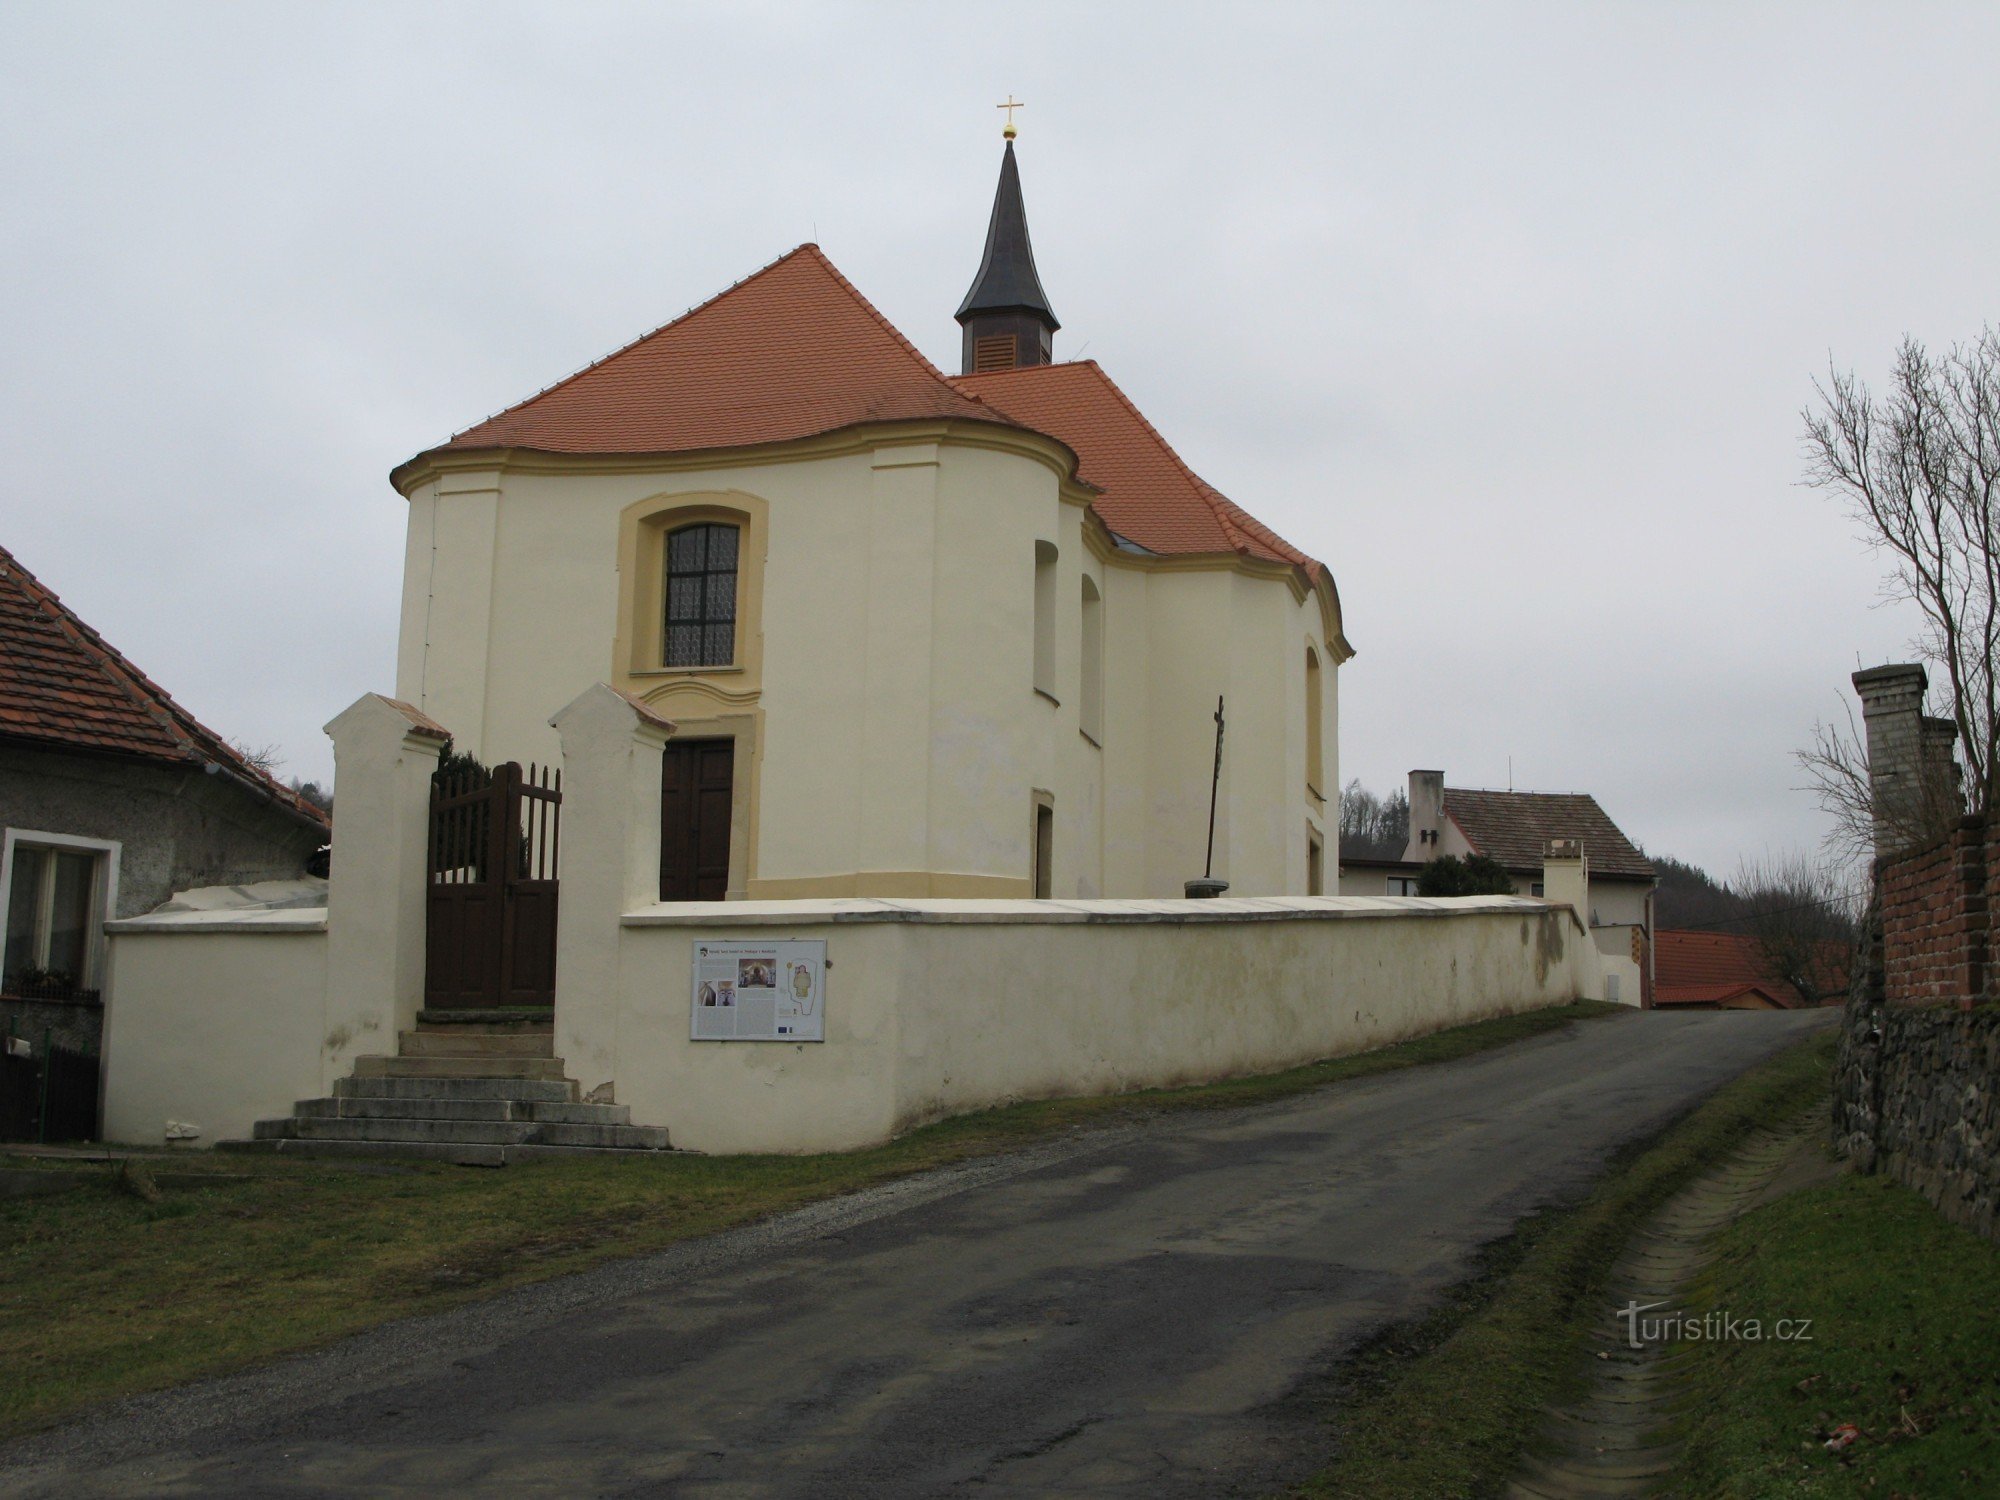 Nezdice - Church of St. grav op